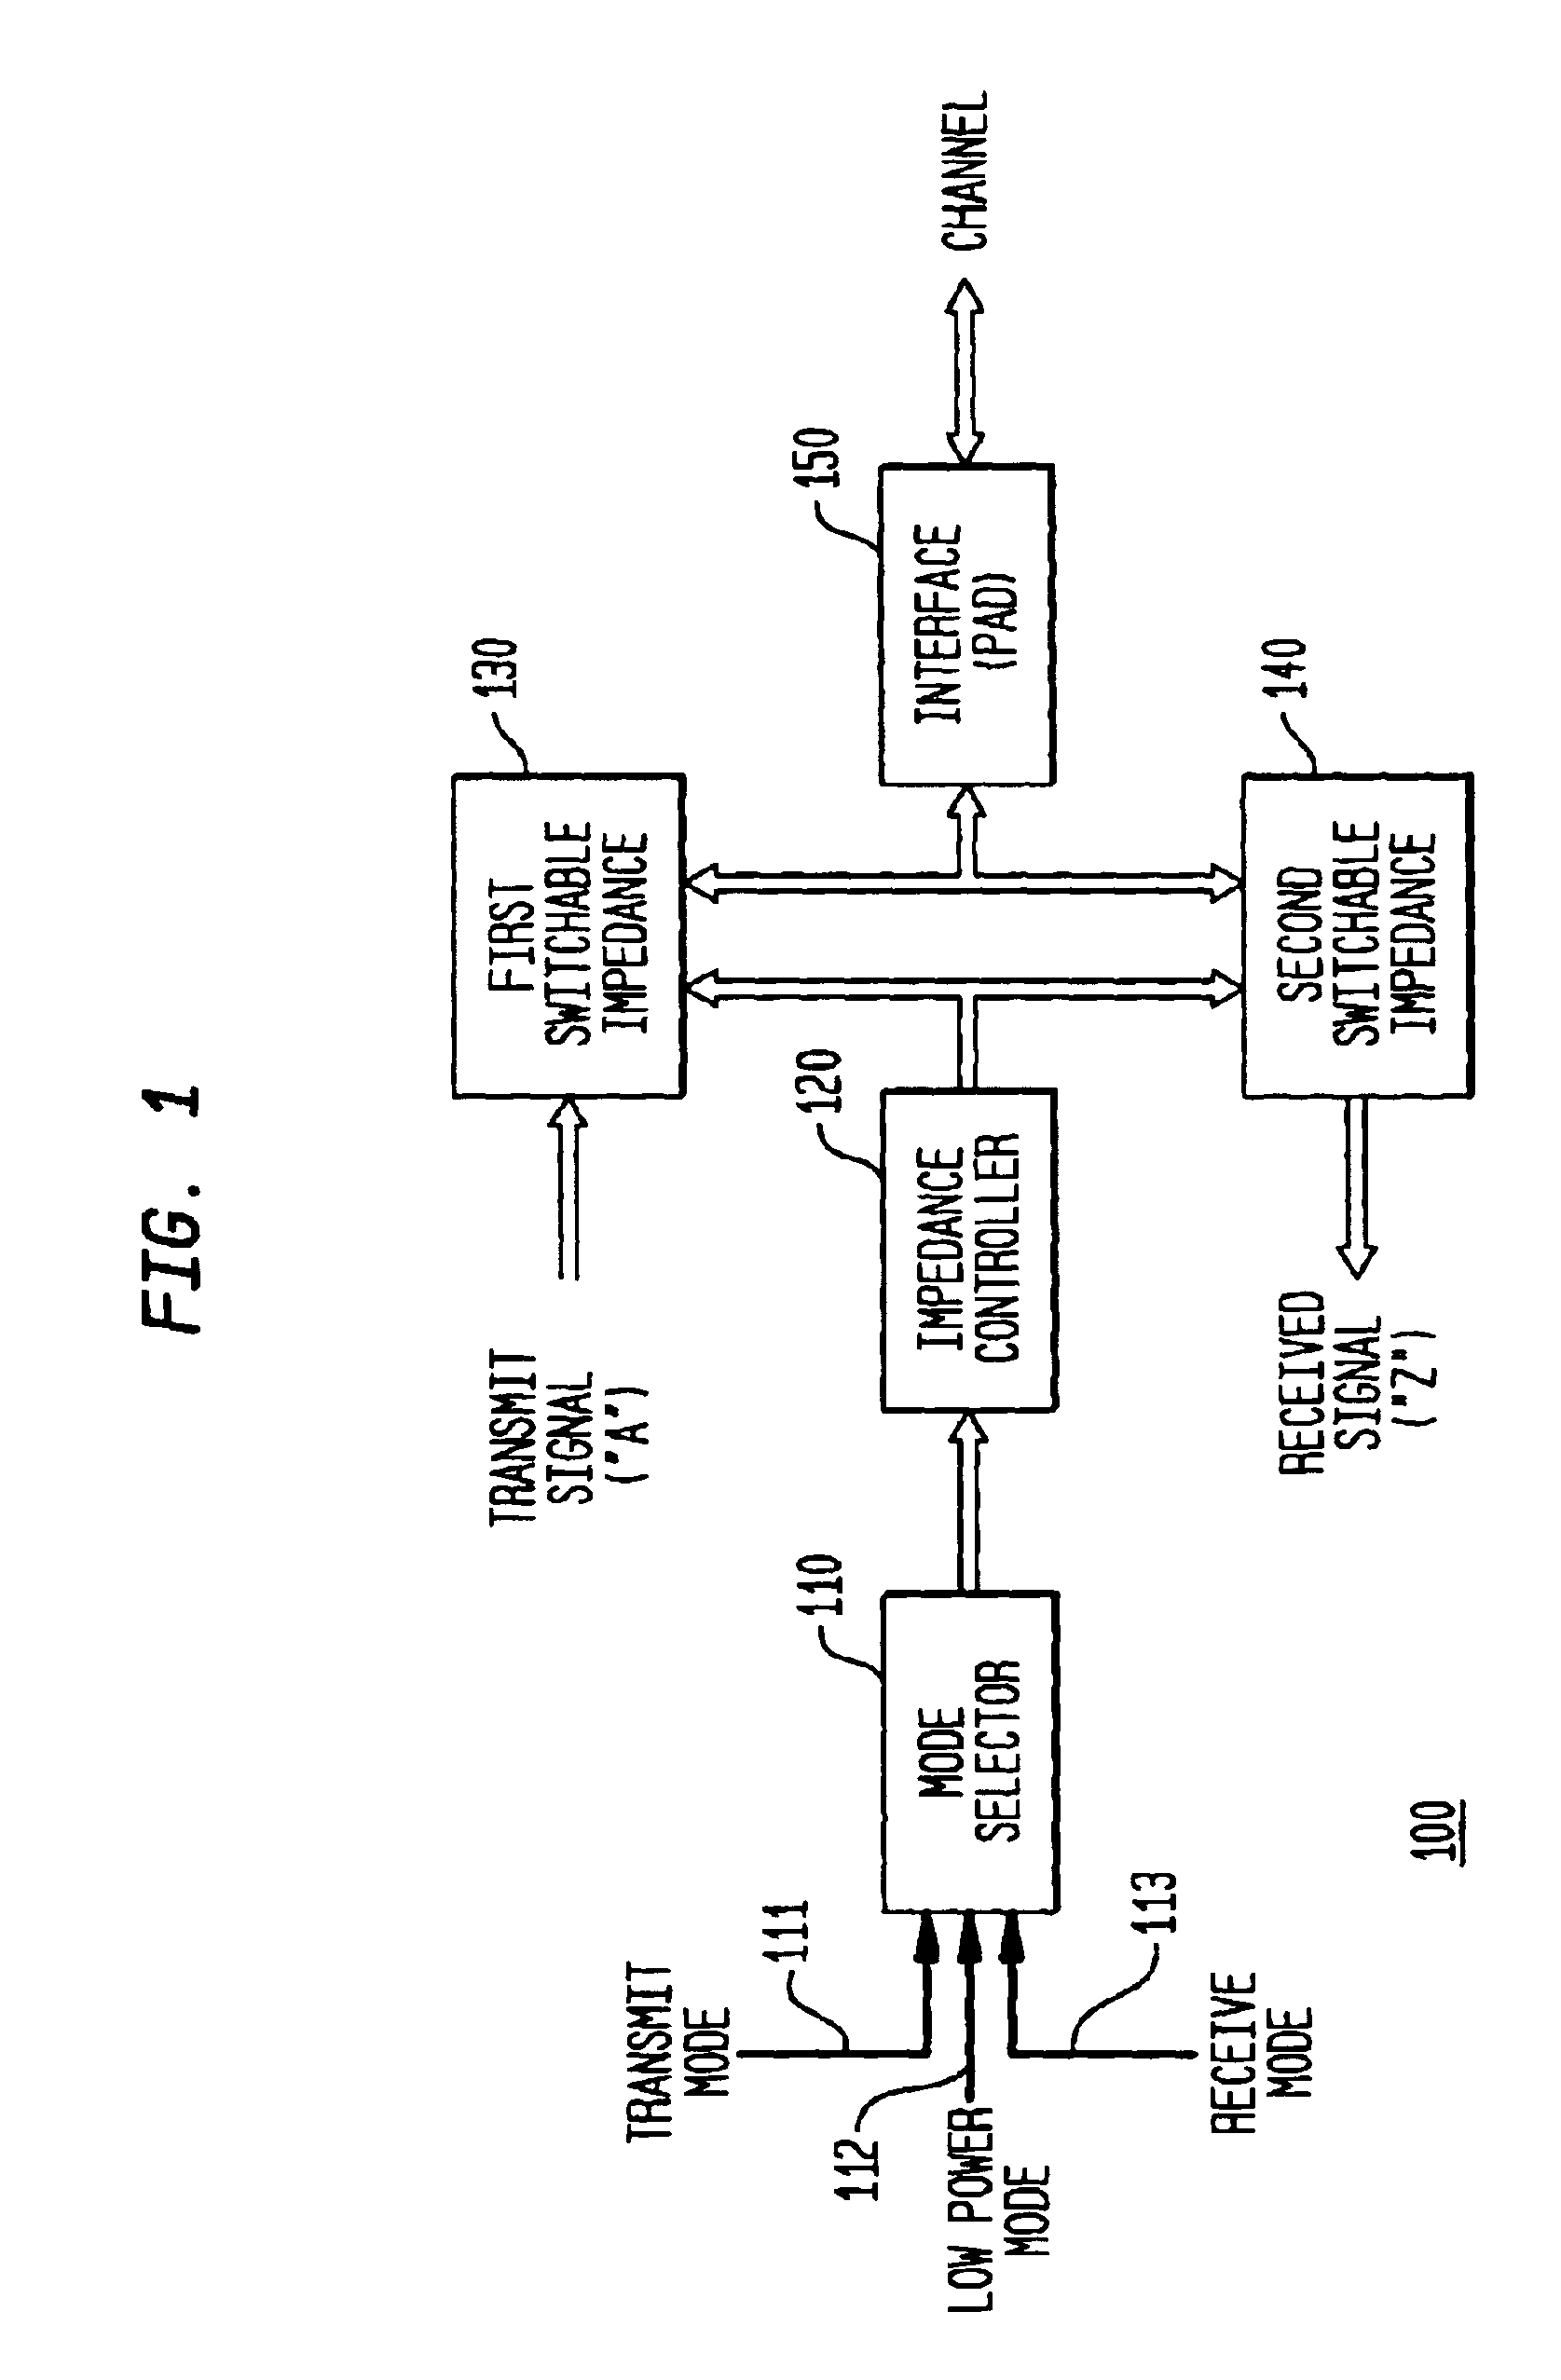 Bi-directional impedance matching circuit